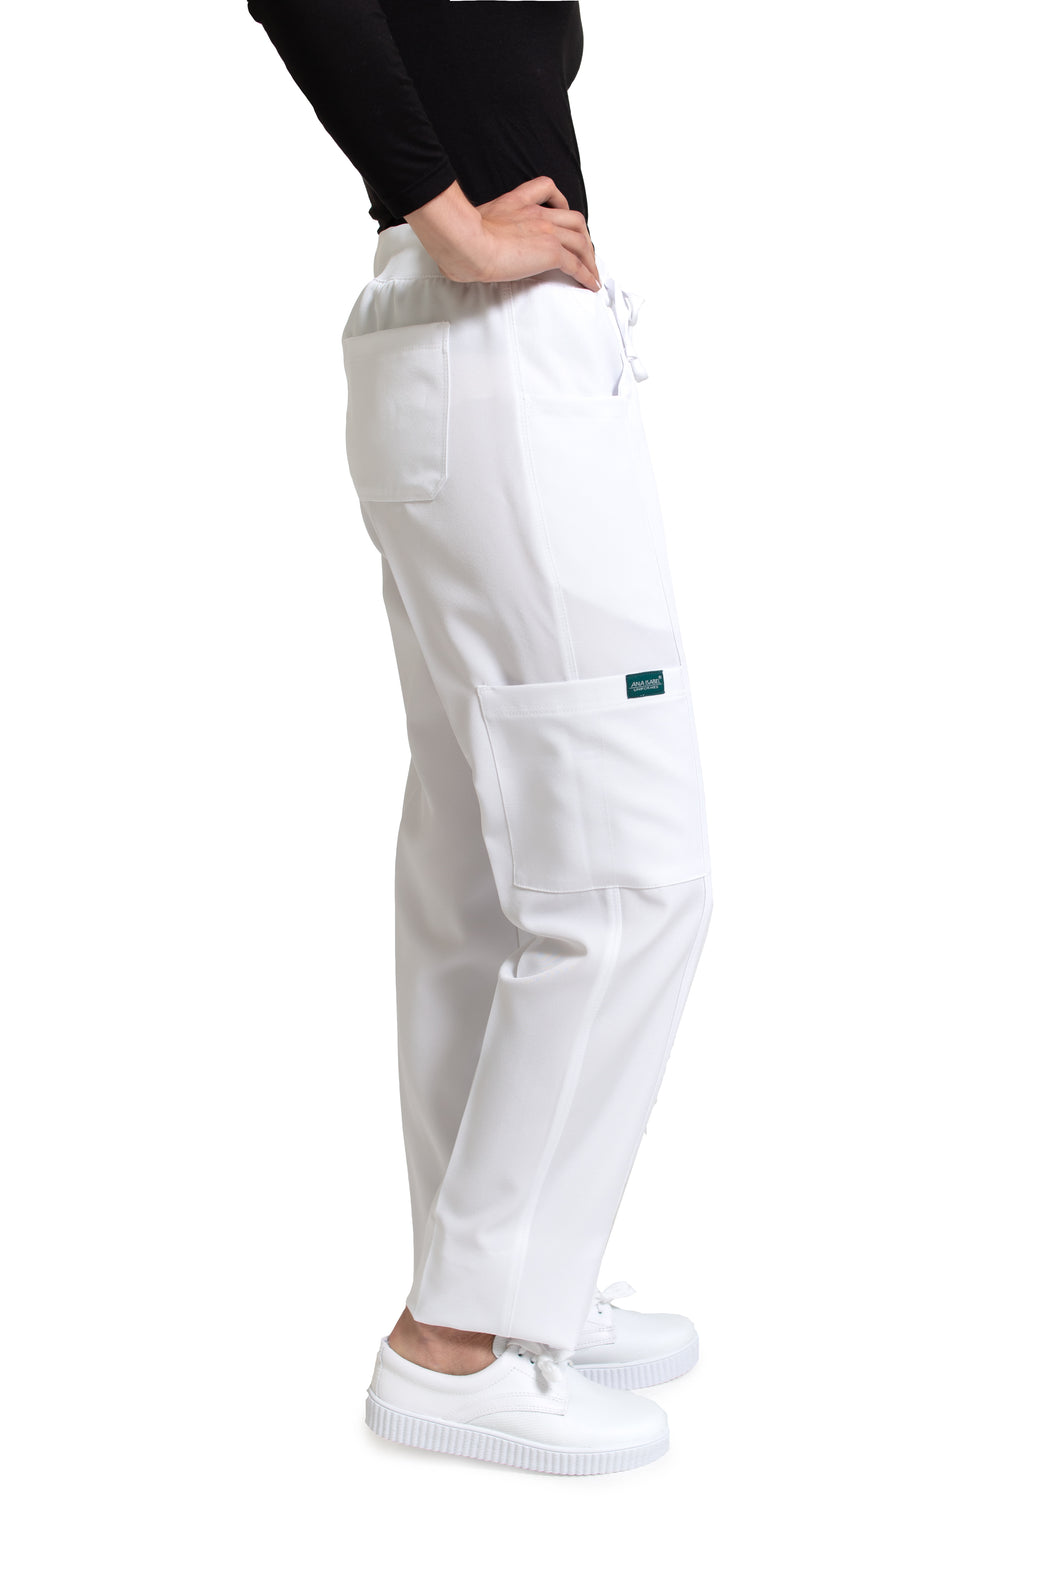 Pantalón Pant EV-120 REPELENTE A FLUIDOS-Color Blanco Dama-Ana Isabel Uniformes